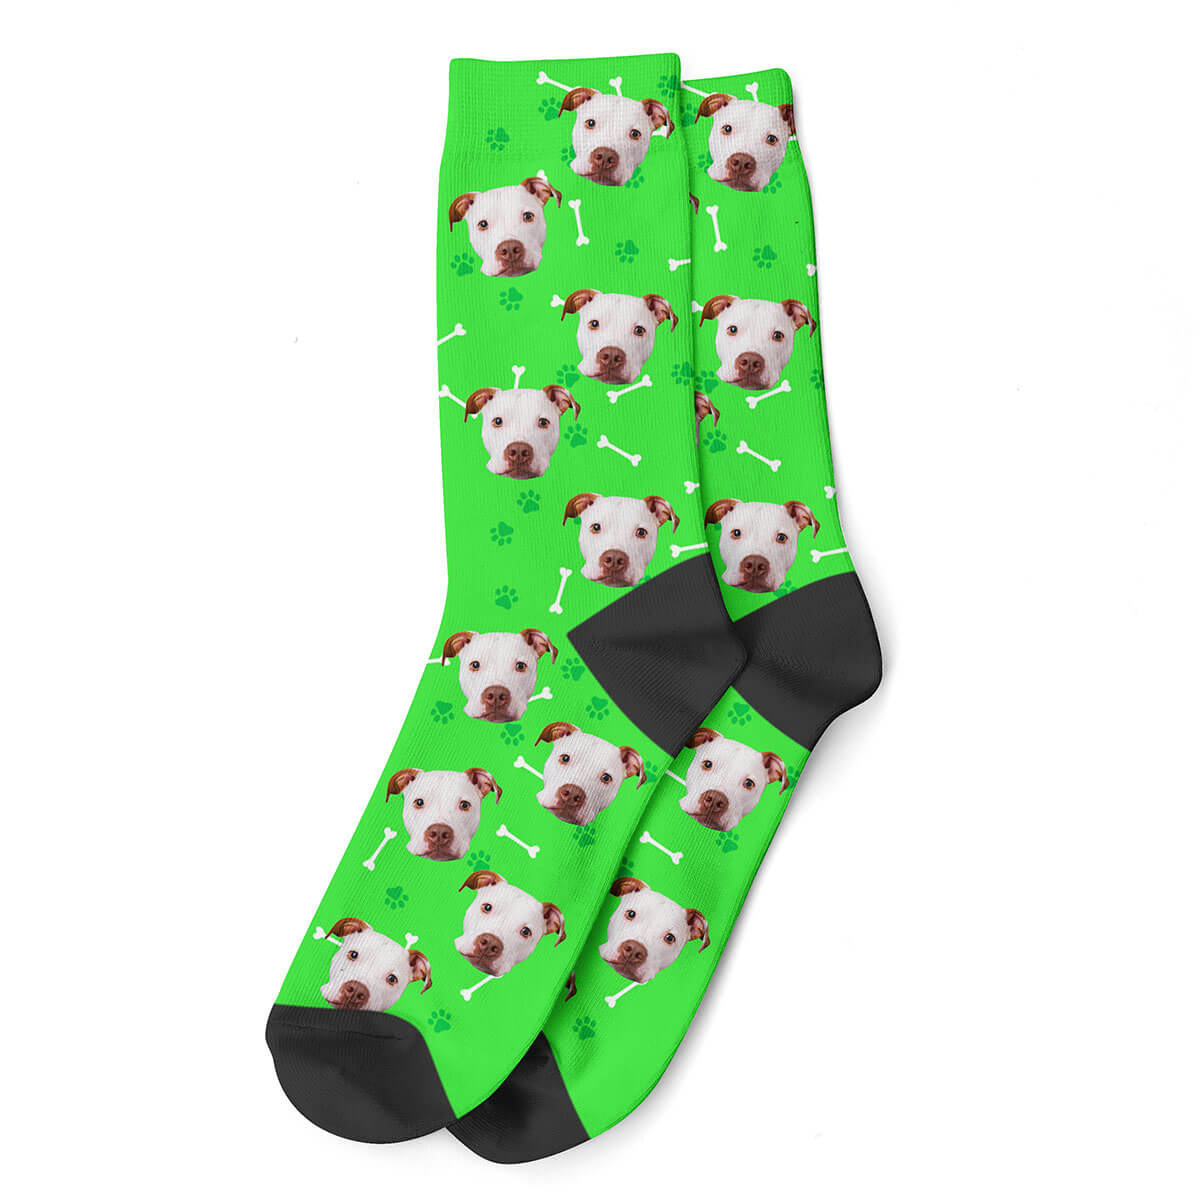 Grand Pet Auto Socks - Calcetines personalizados con foto de tu perro